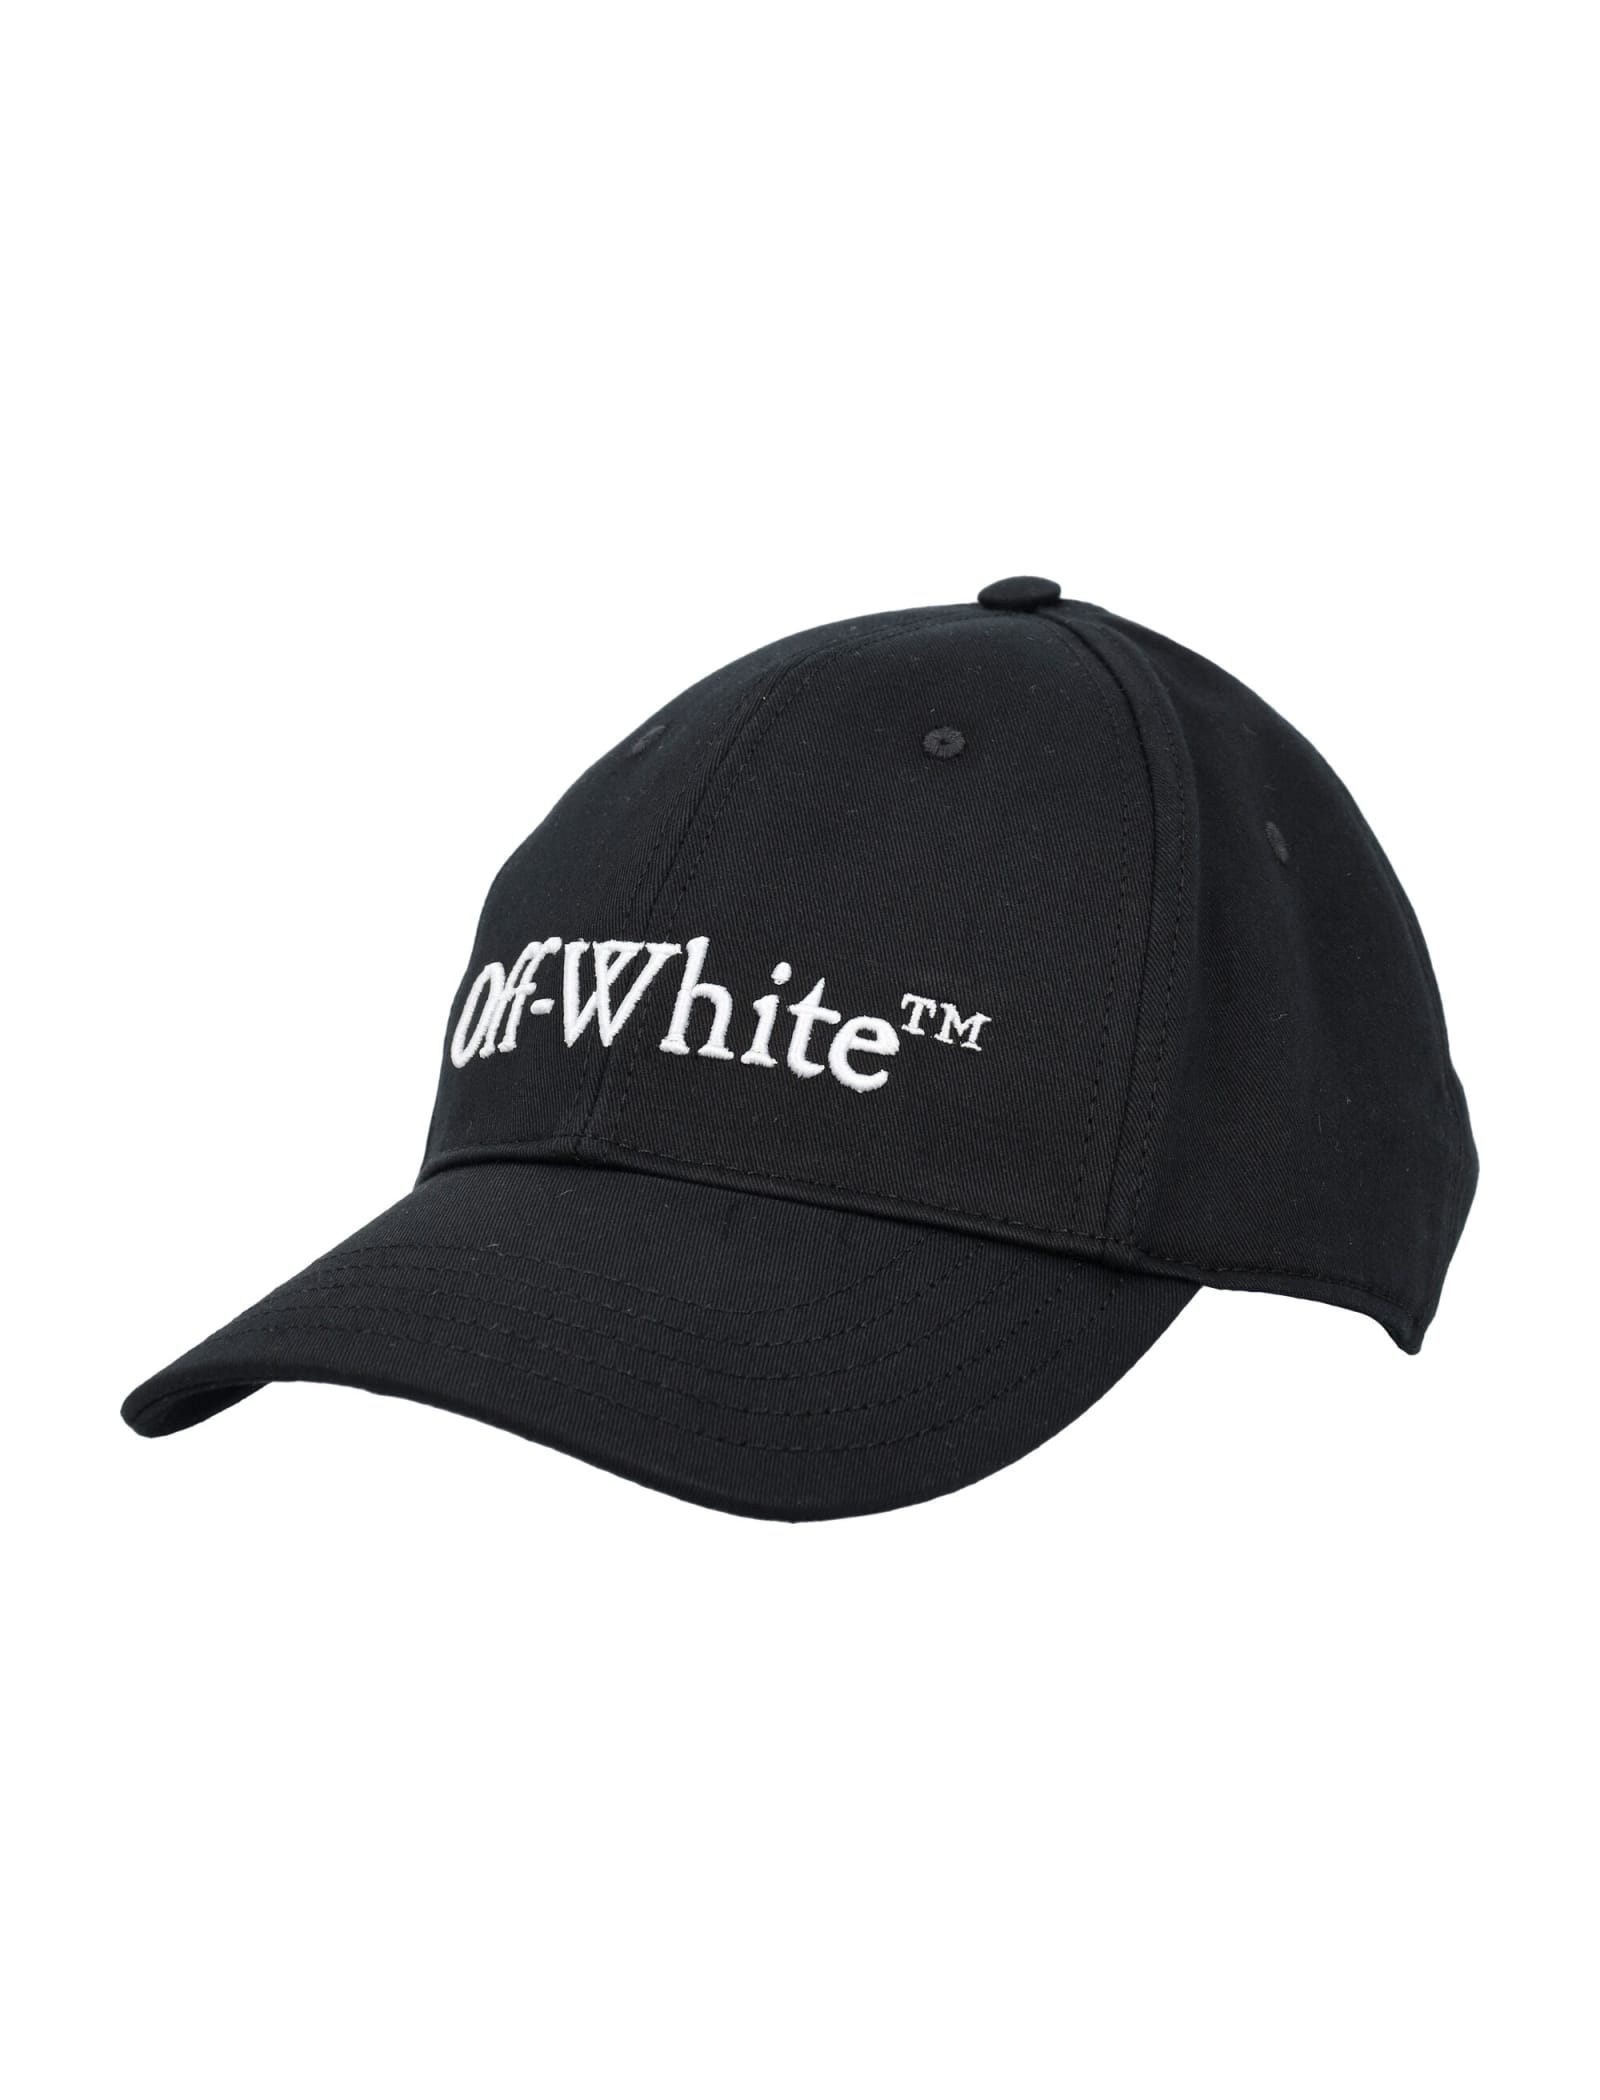 OFF-WHITE BOOKISH BASEBALL CAP